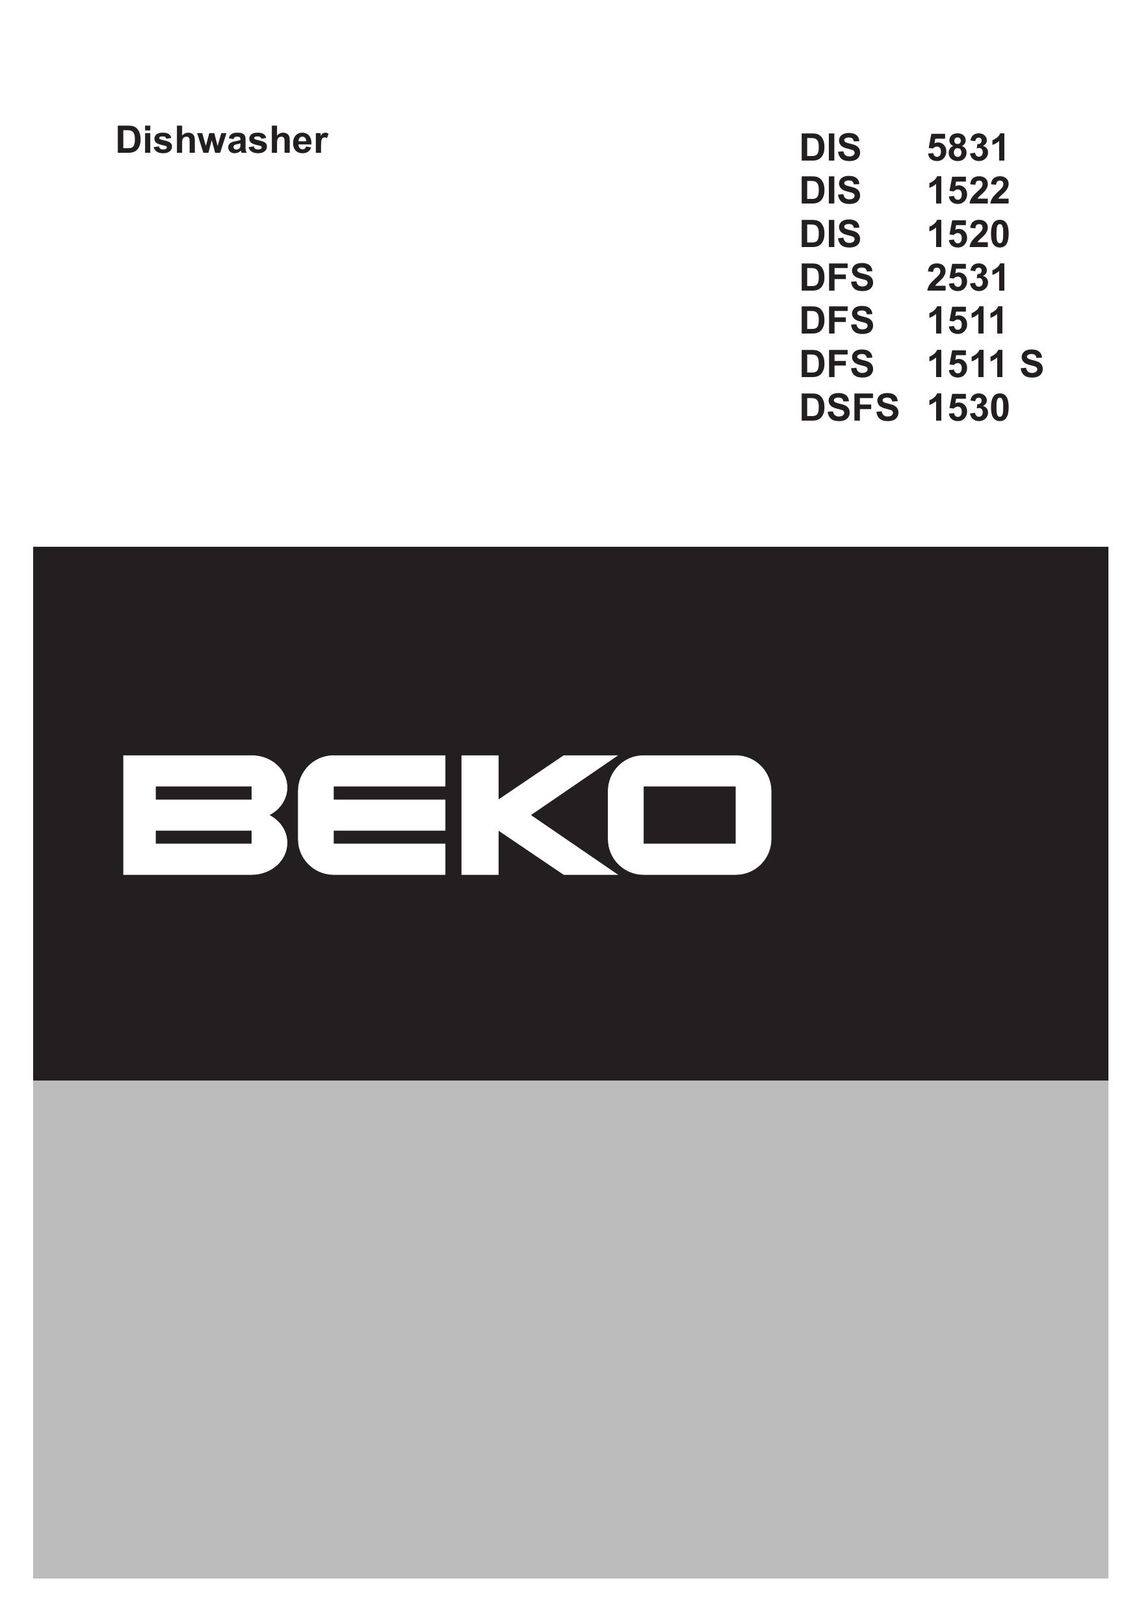 Beko DSFS 1530 Dishwasher User Manual